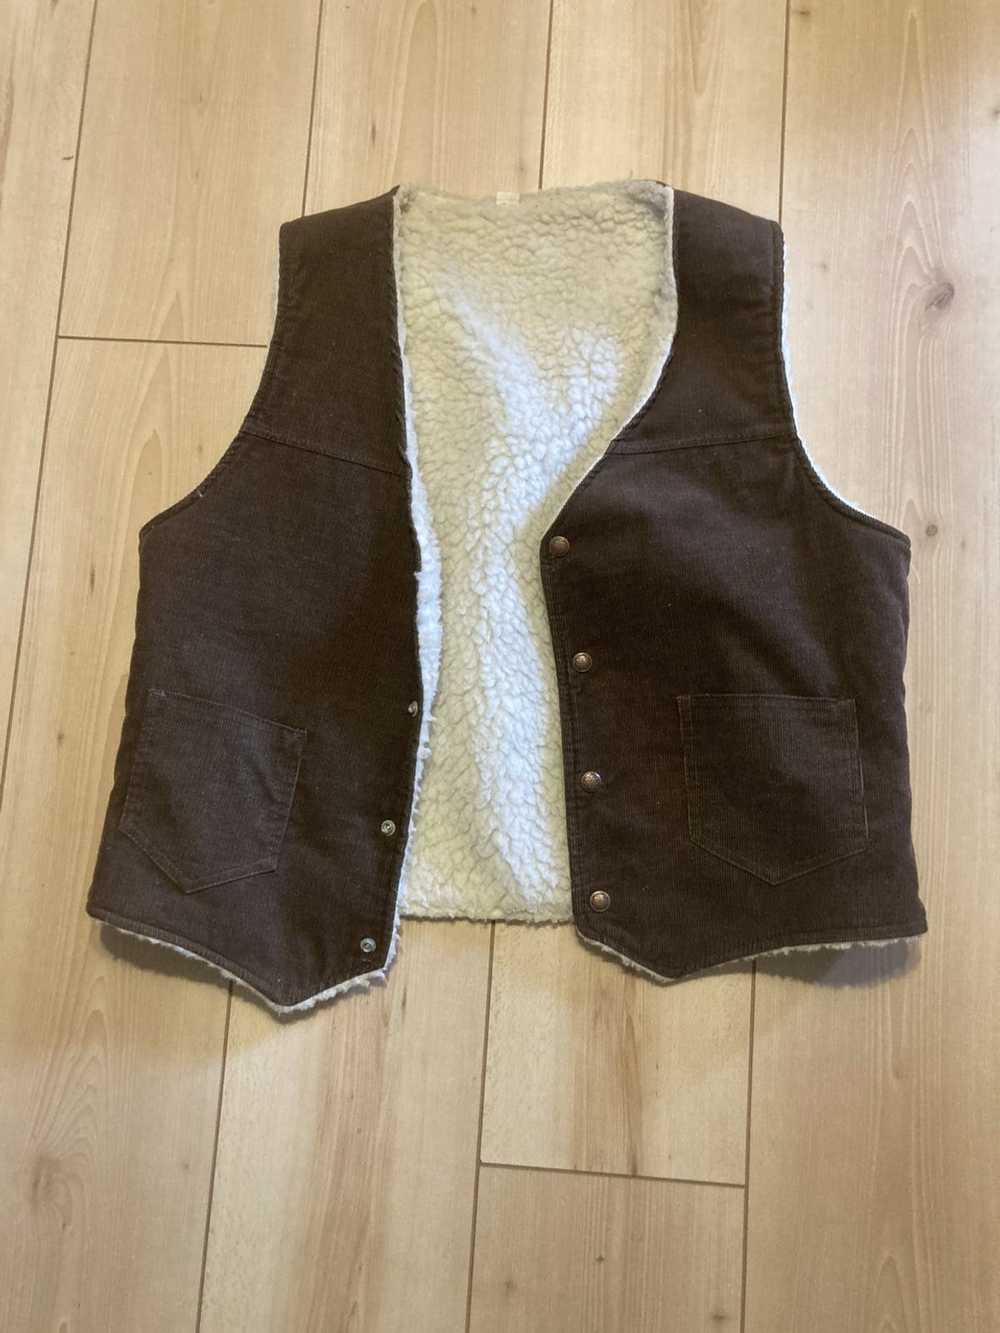 Vintage 70s brown corduroy vest - image 1